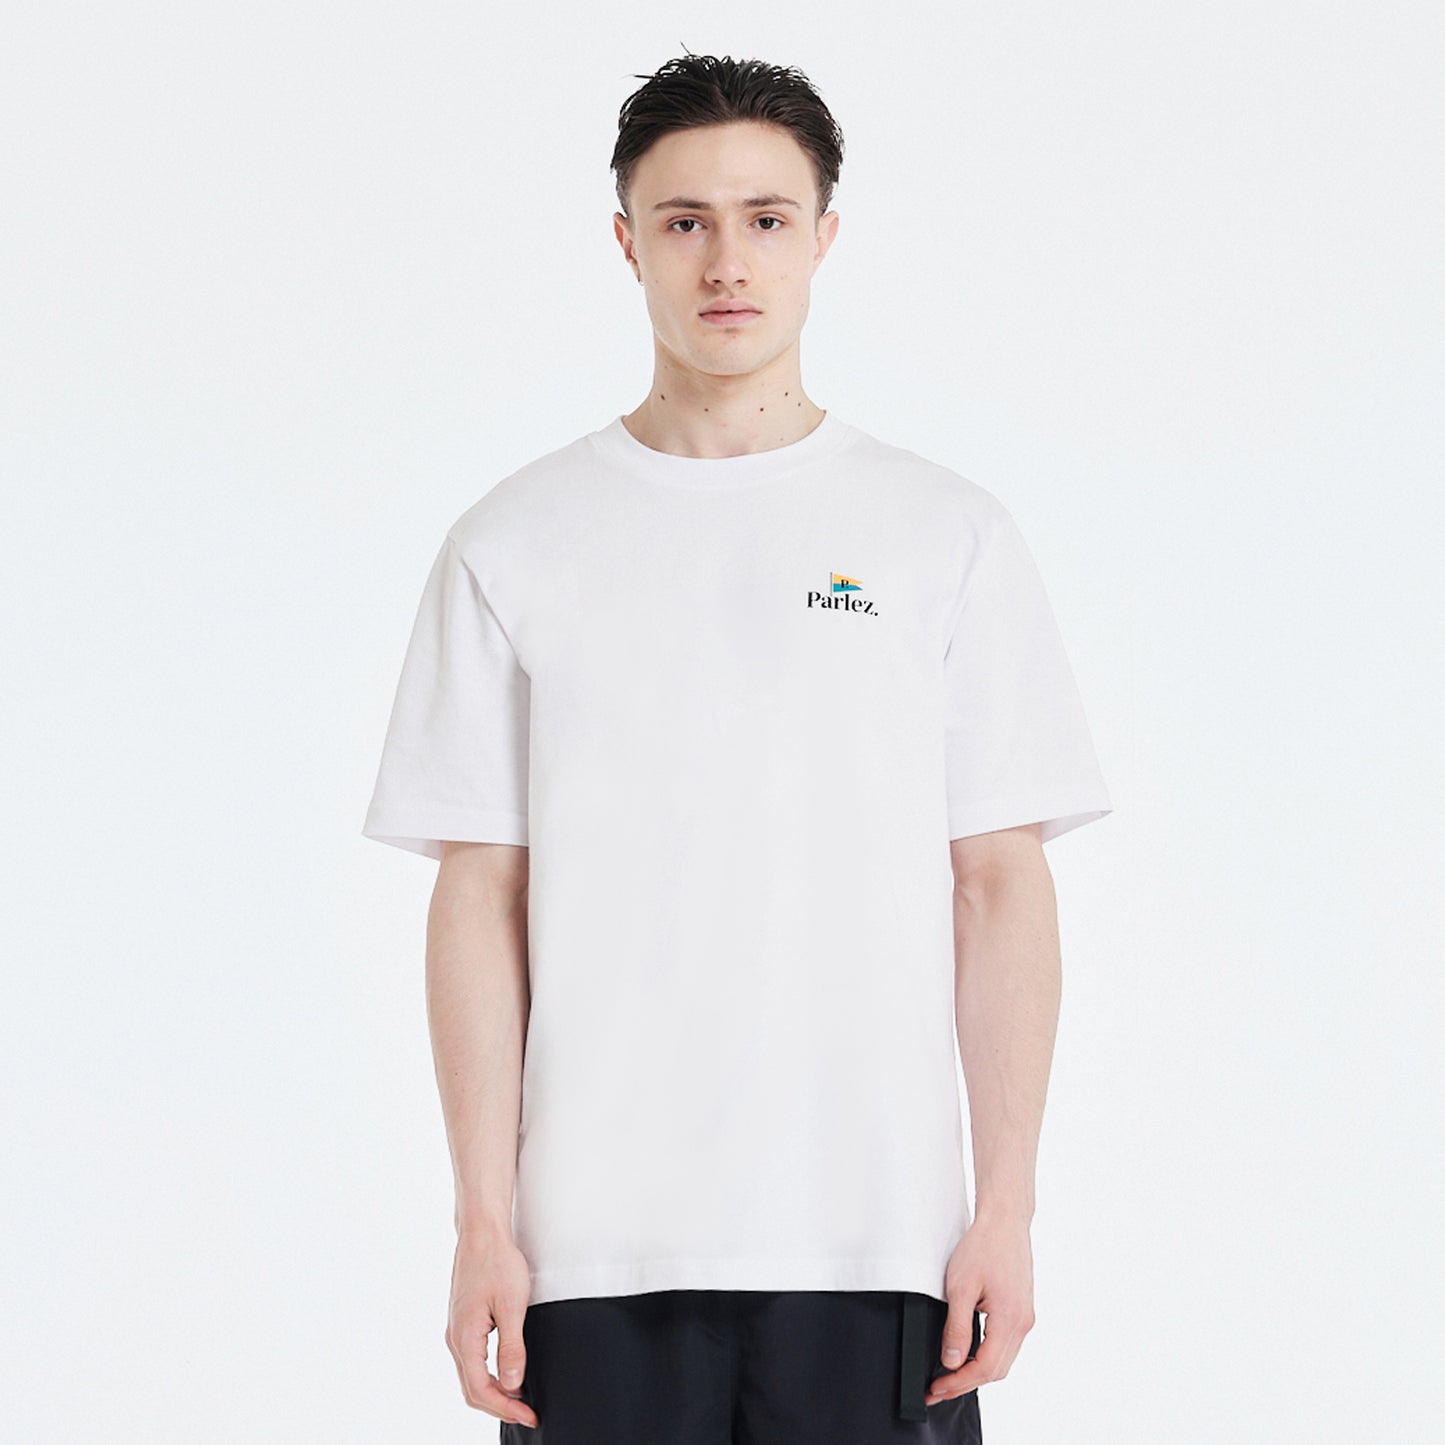 Hunter T-Shirt White